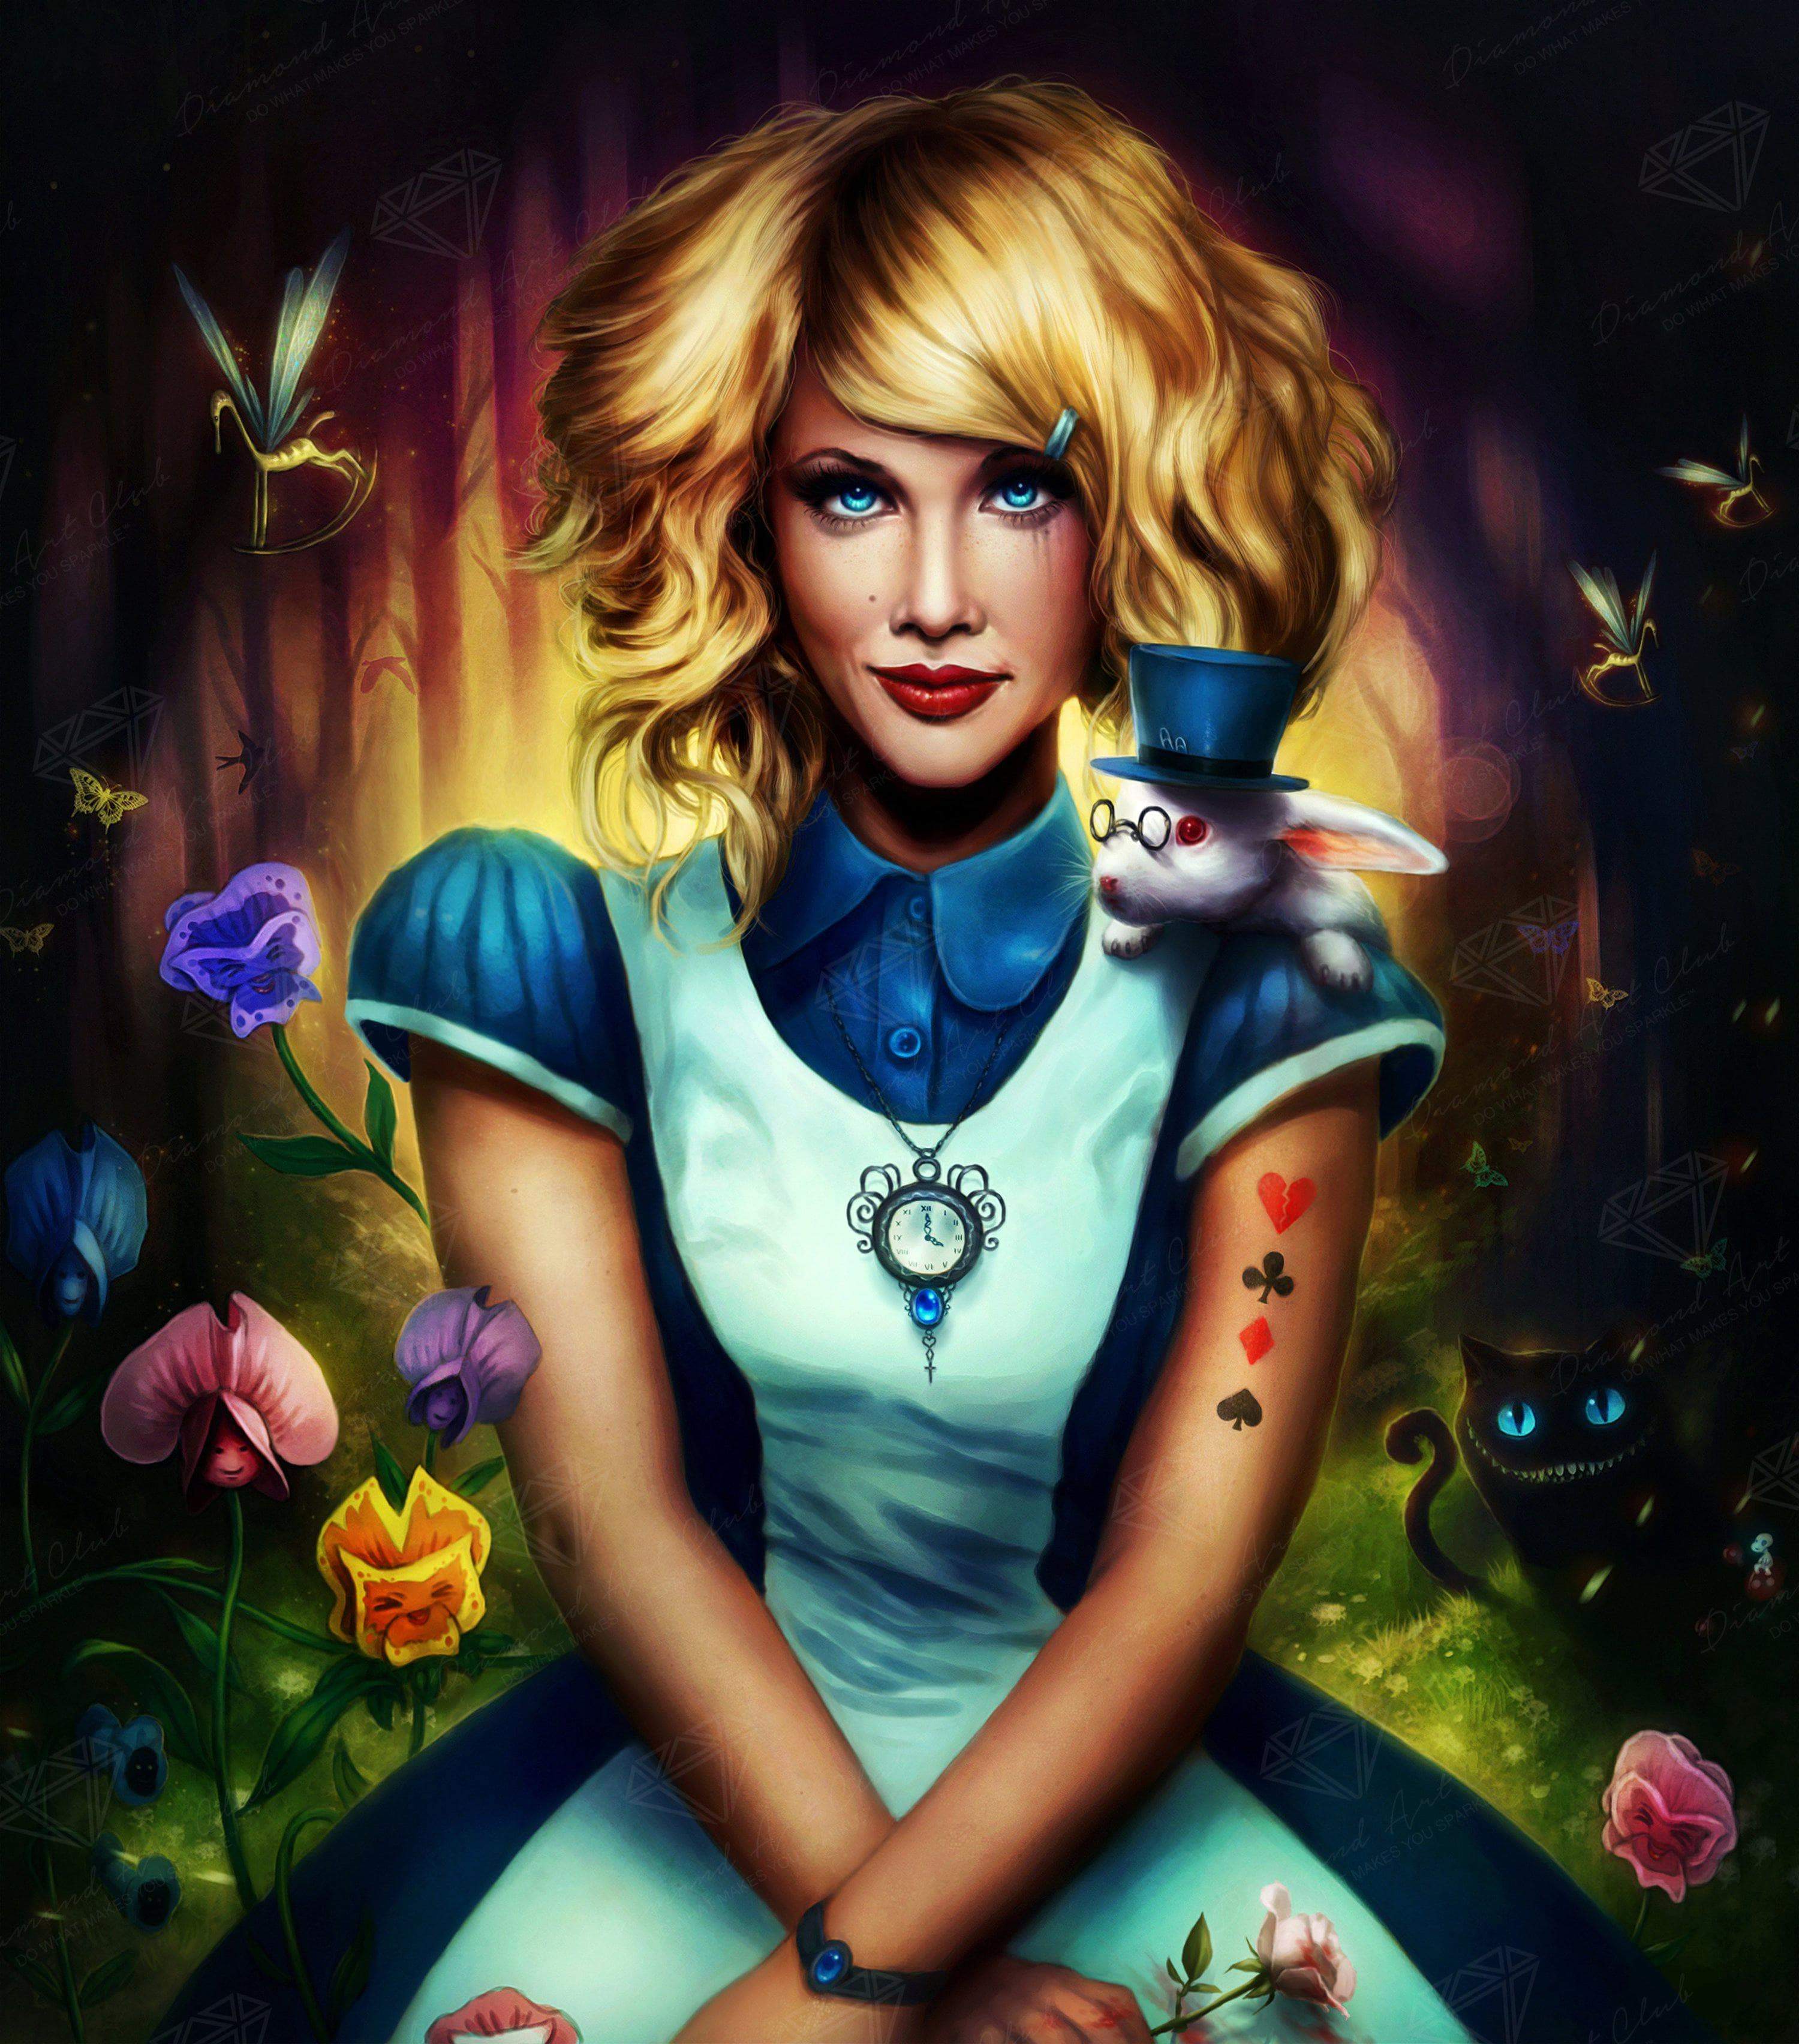 Alice in Wonderland – Diamond Art Club